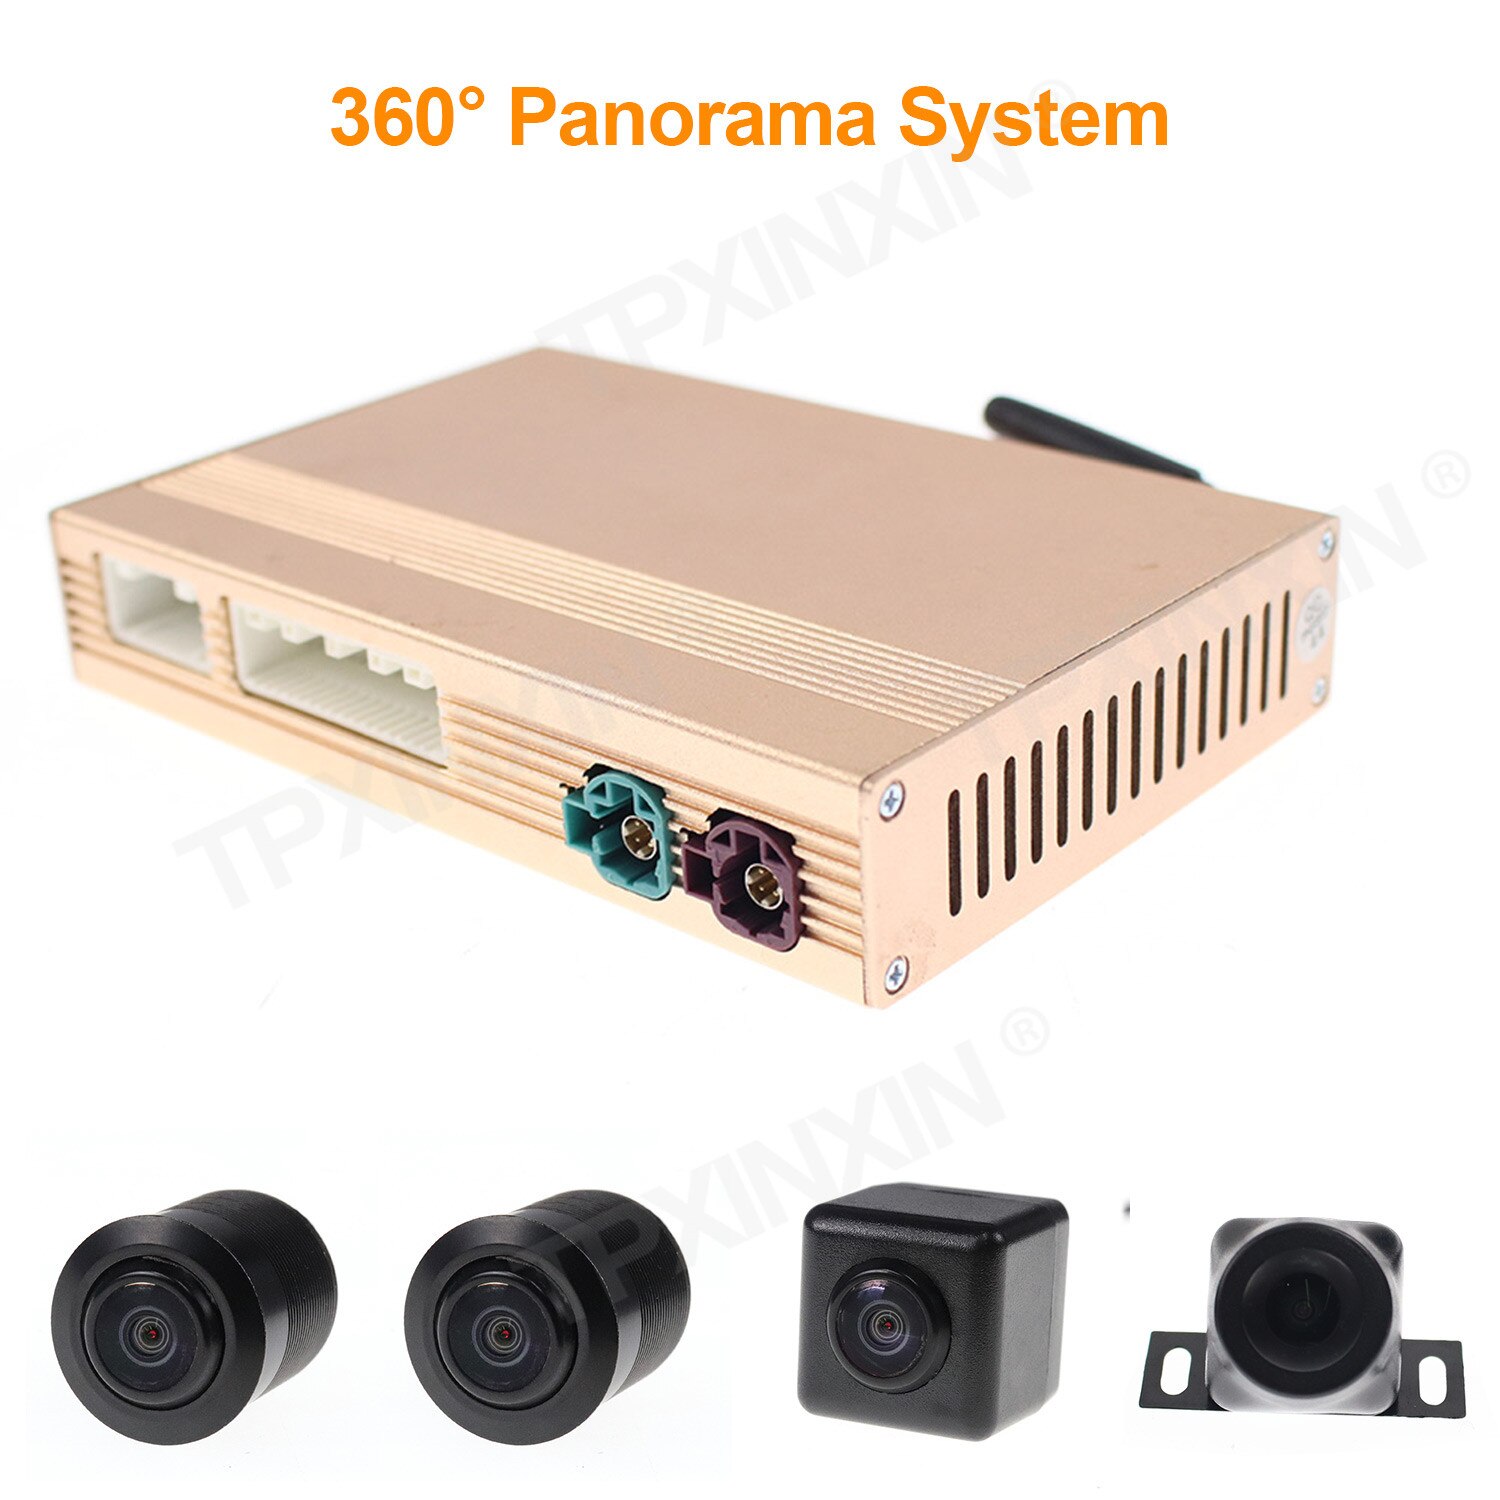 TPXINXIN 3D Car DVR HD 360 Surround View System Driving With Bird View Panorama System 4 Car Camera 1080P DVR G-Sensor